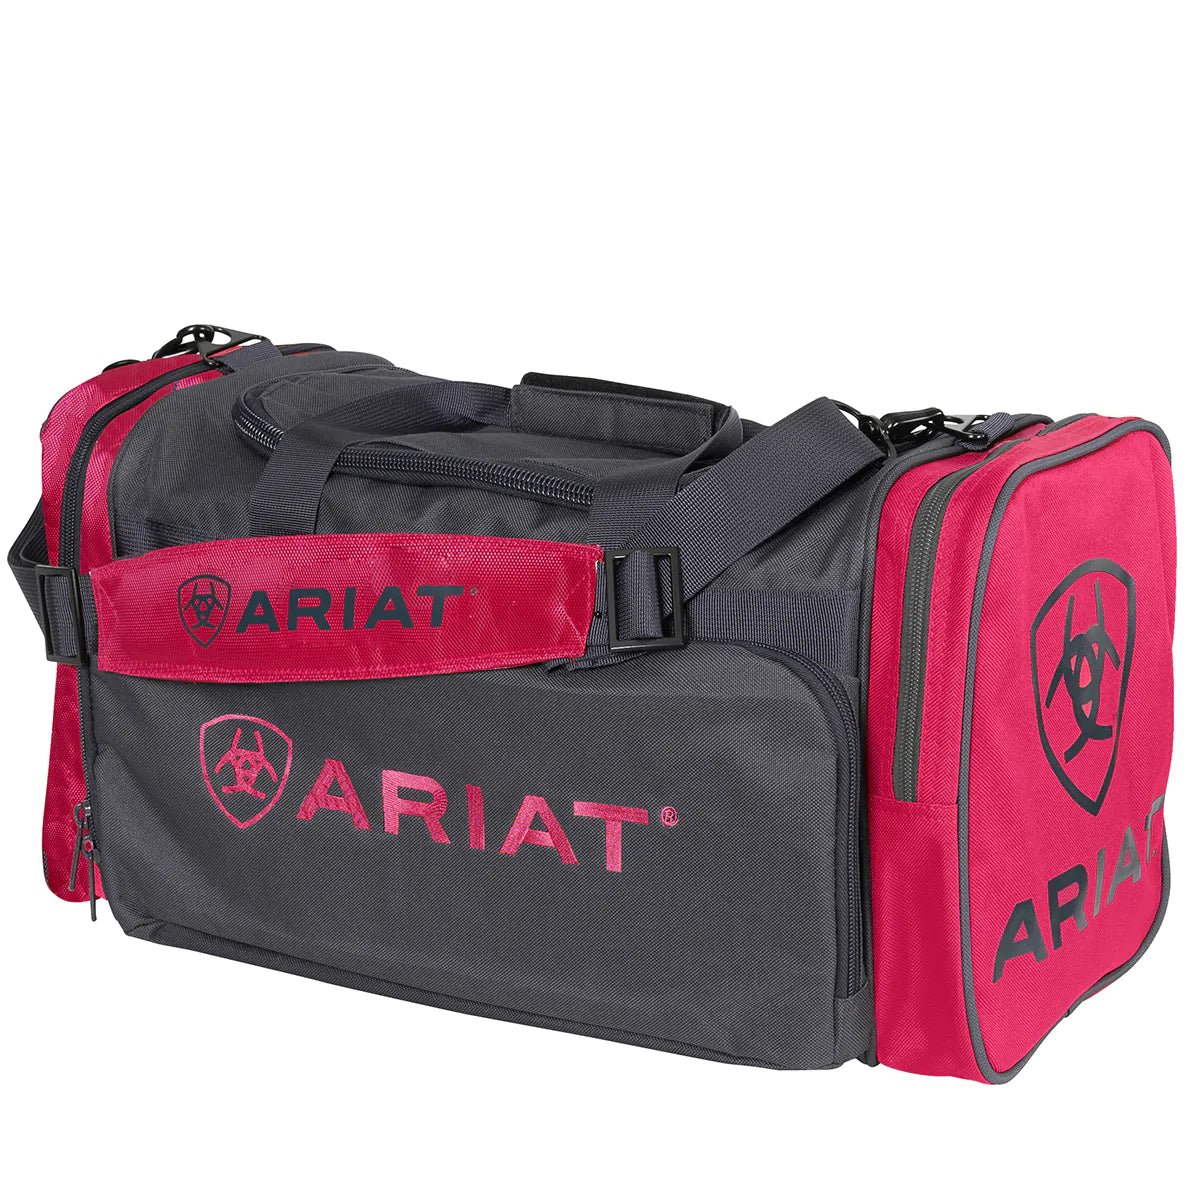 Ariat Junior Gear Bag Pink/Charcoal